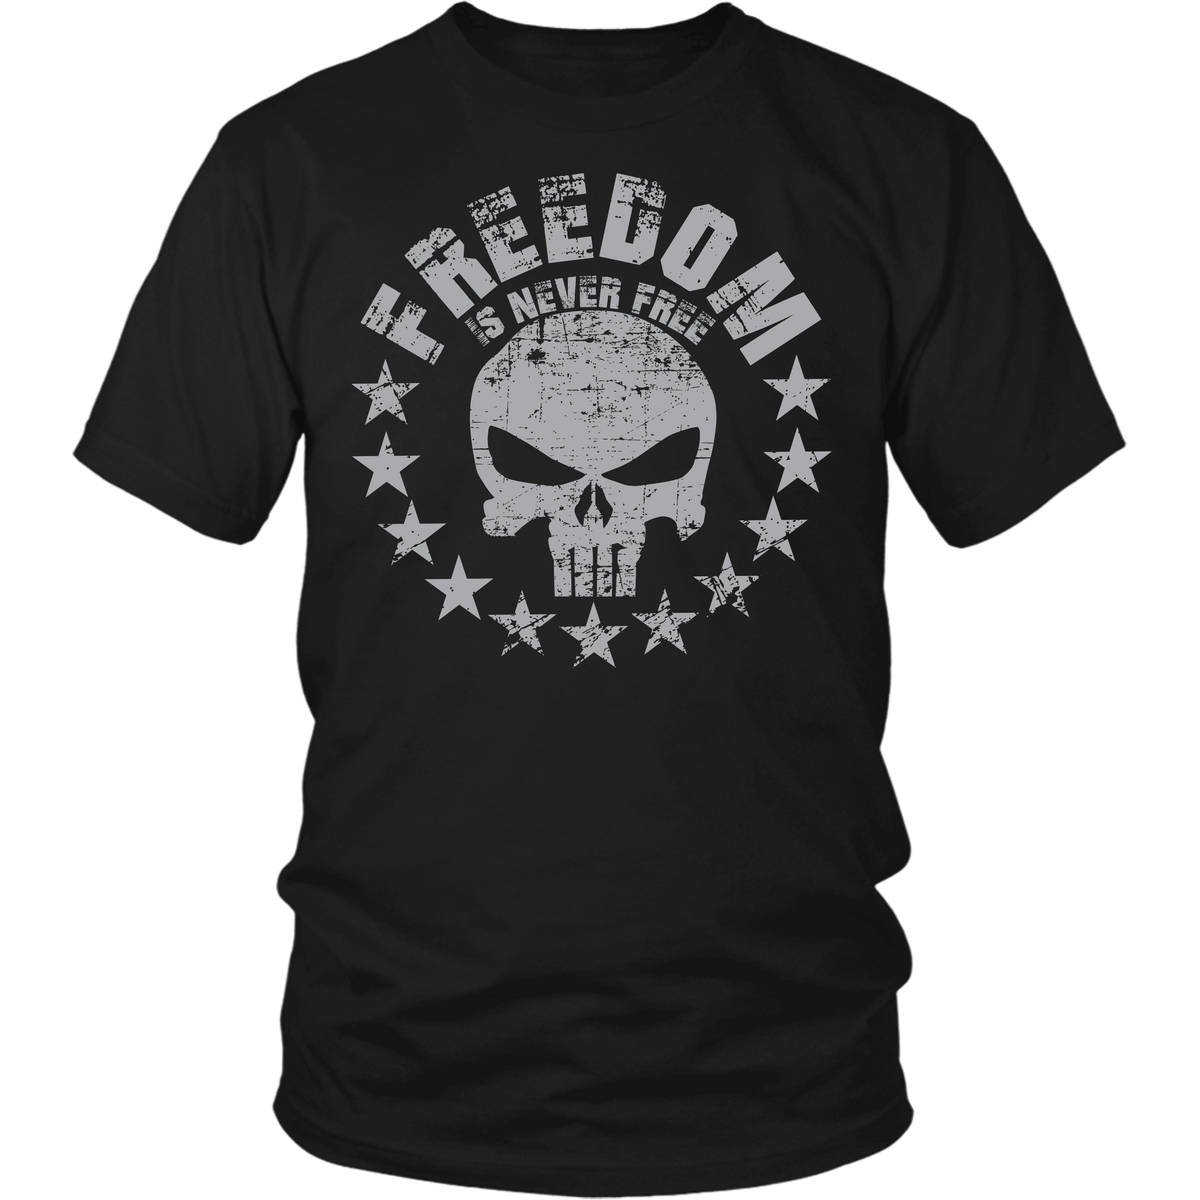 Freedom Is Never Free T-shirt Design - Punisher Skull Stars, Freedom S ...